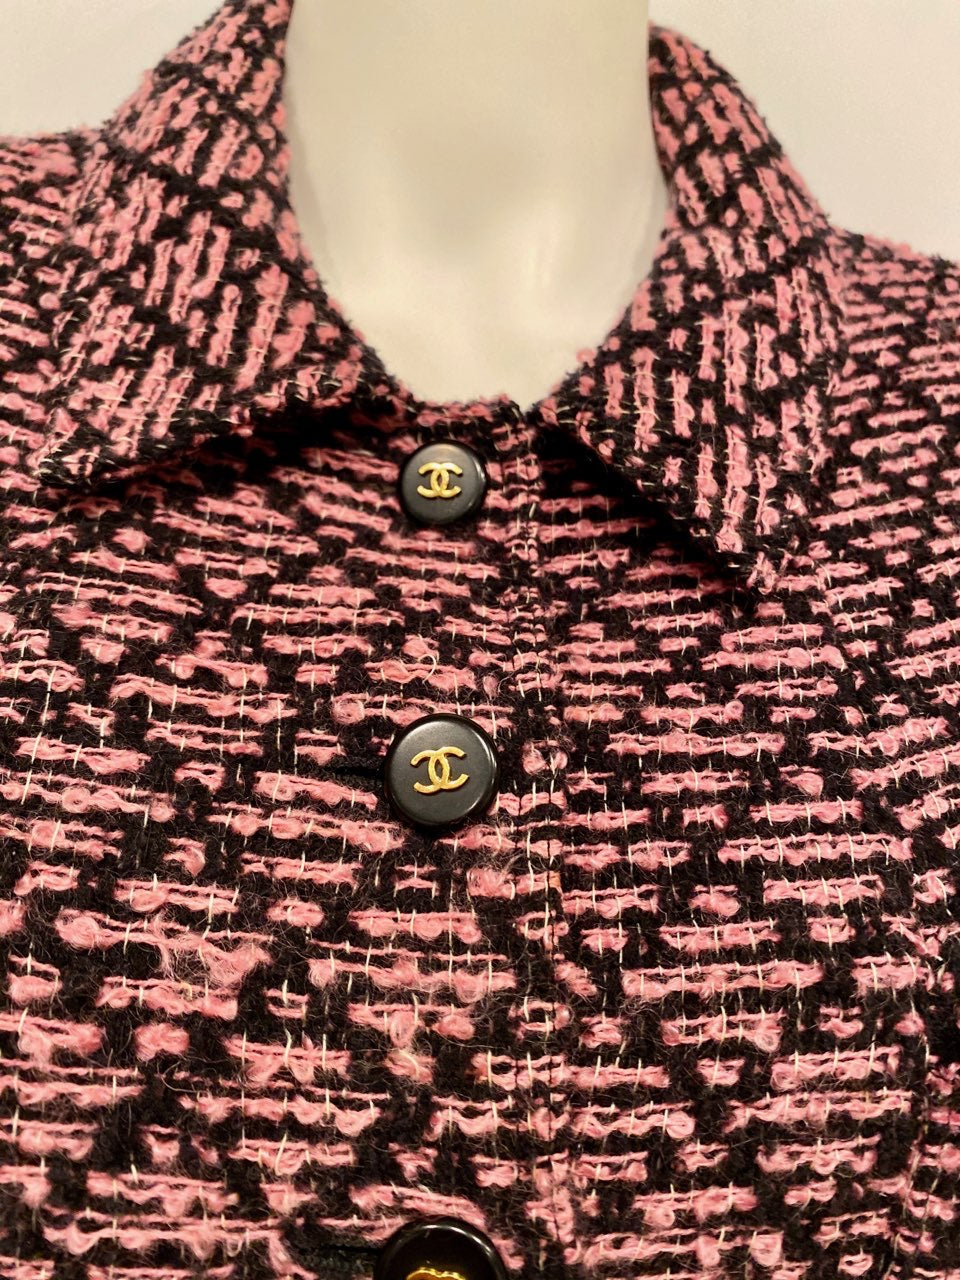 95P, 1995 Spring Vintage Chanel Pink Black Boucle Wool Tweed Dress Jac –  HelensChanel